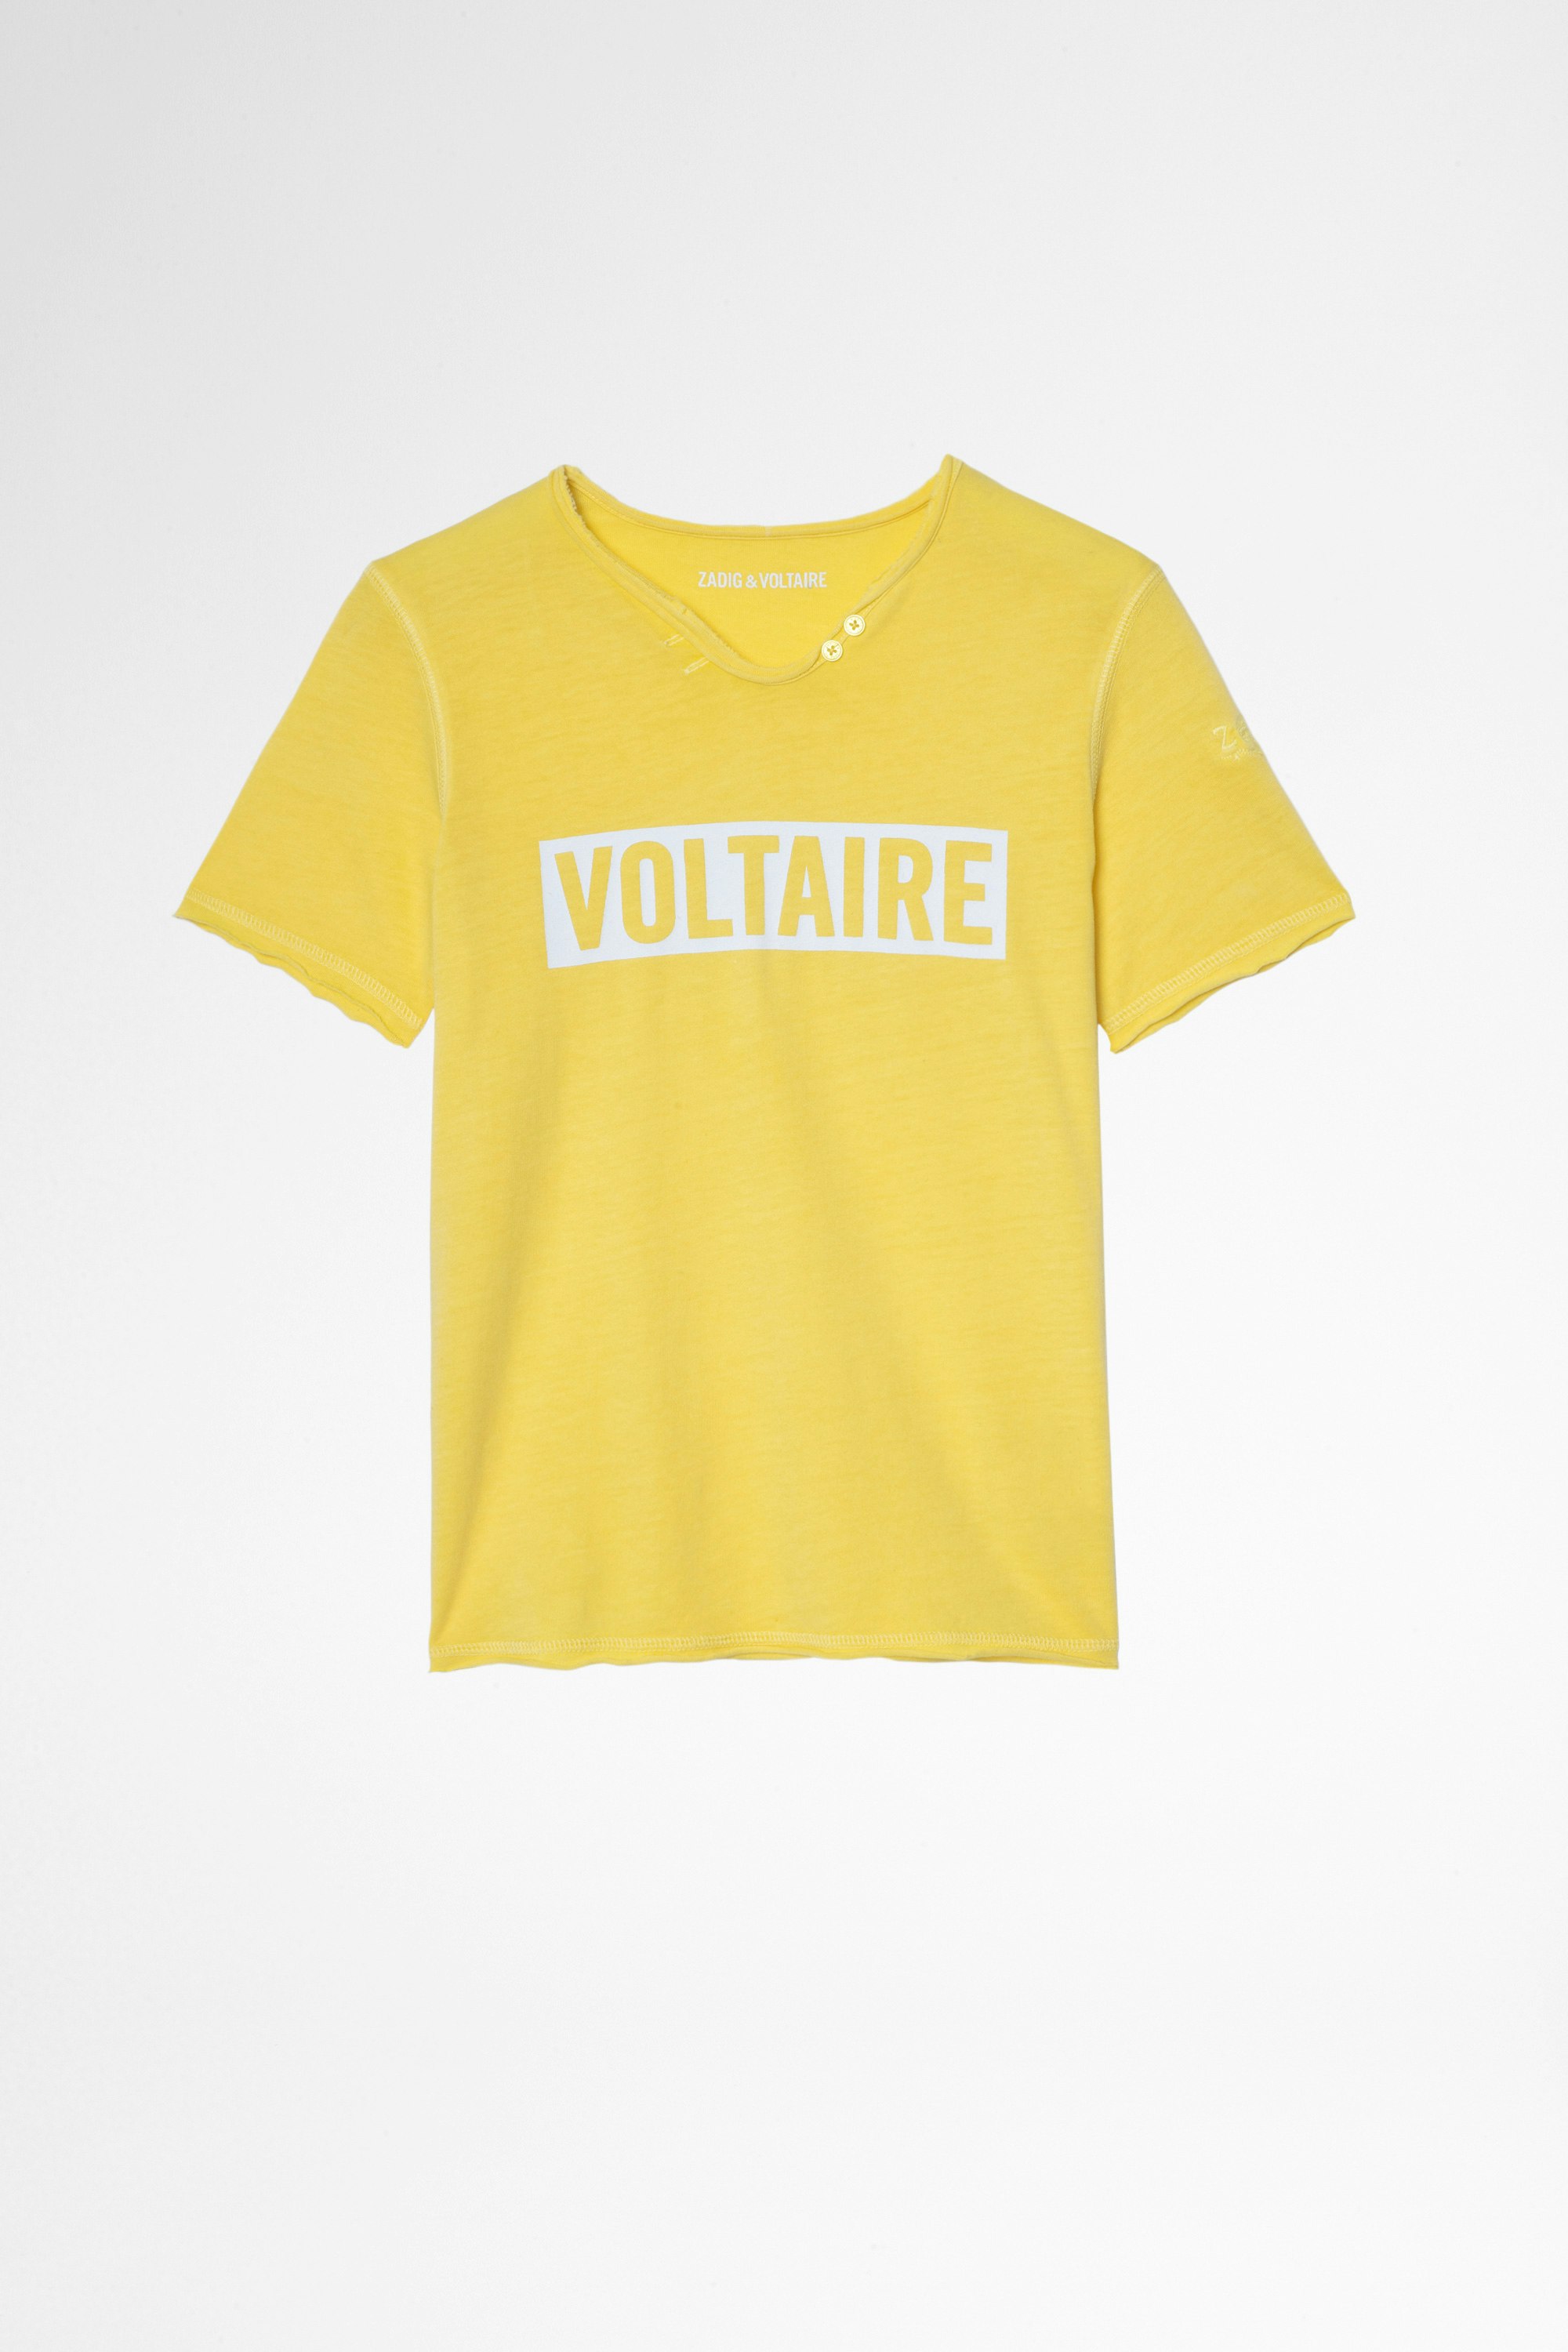 Boxer Children's T-Shirt Children's cotton t-shirt in yellow